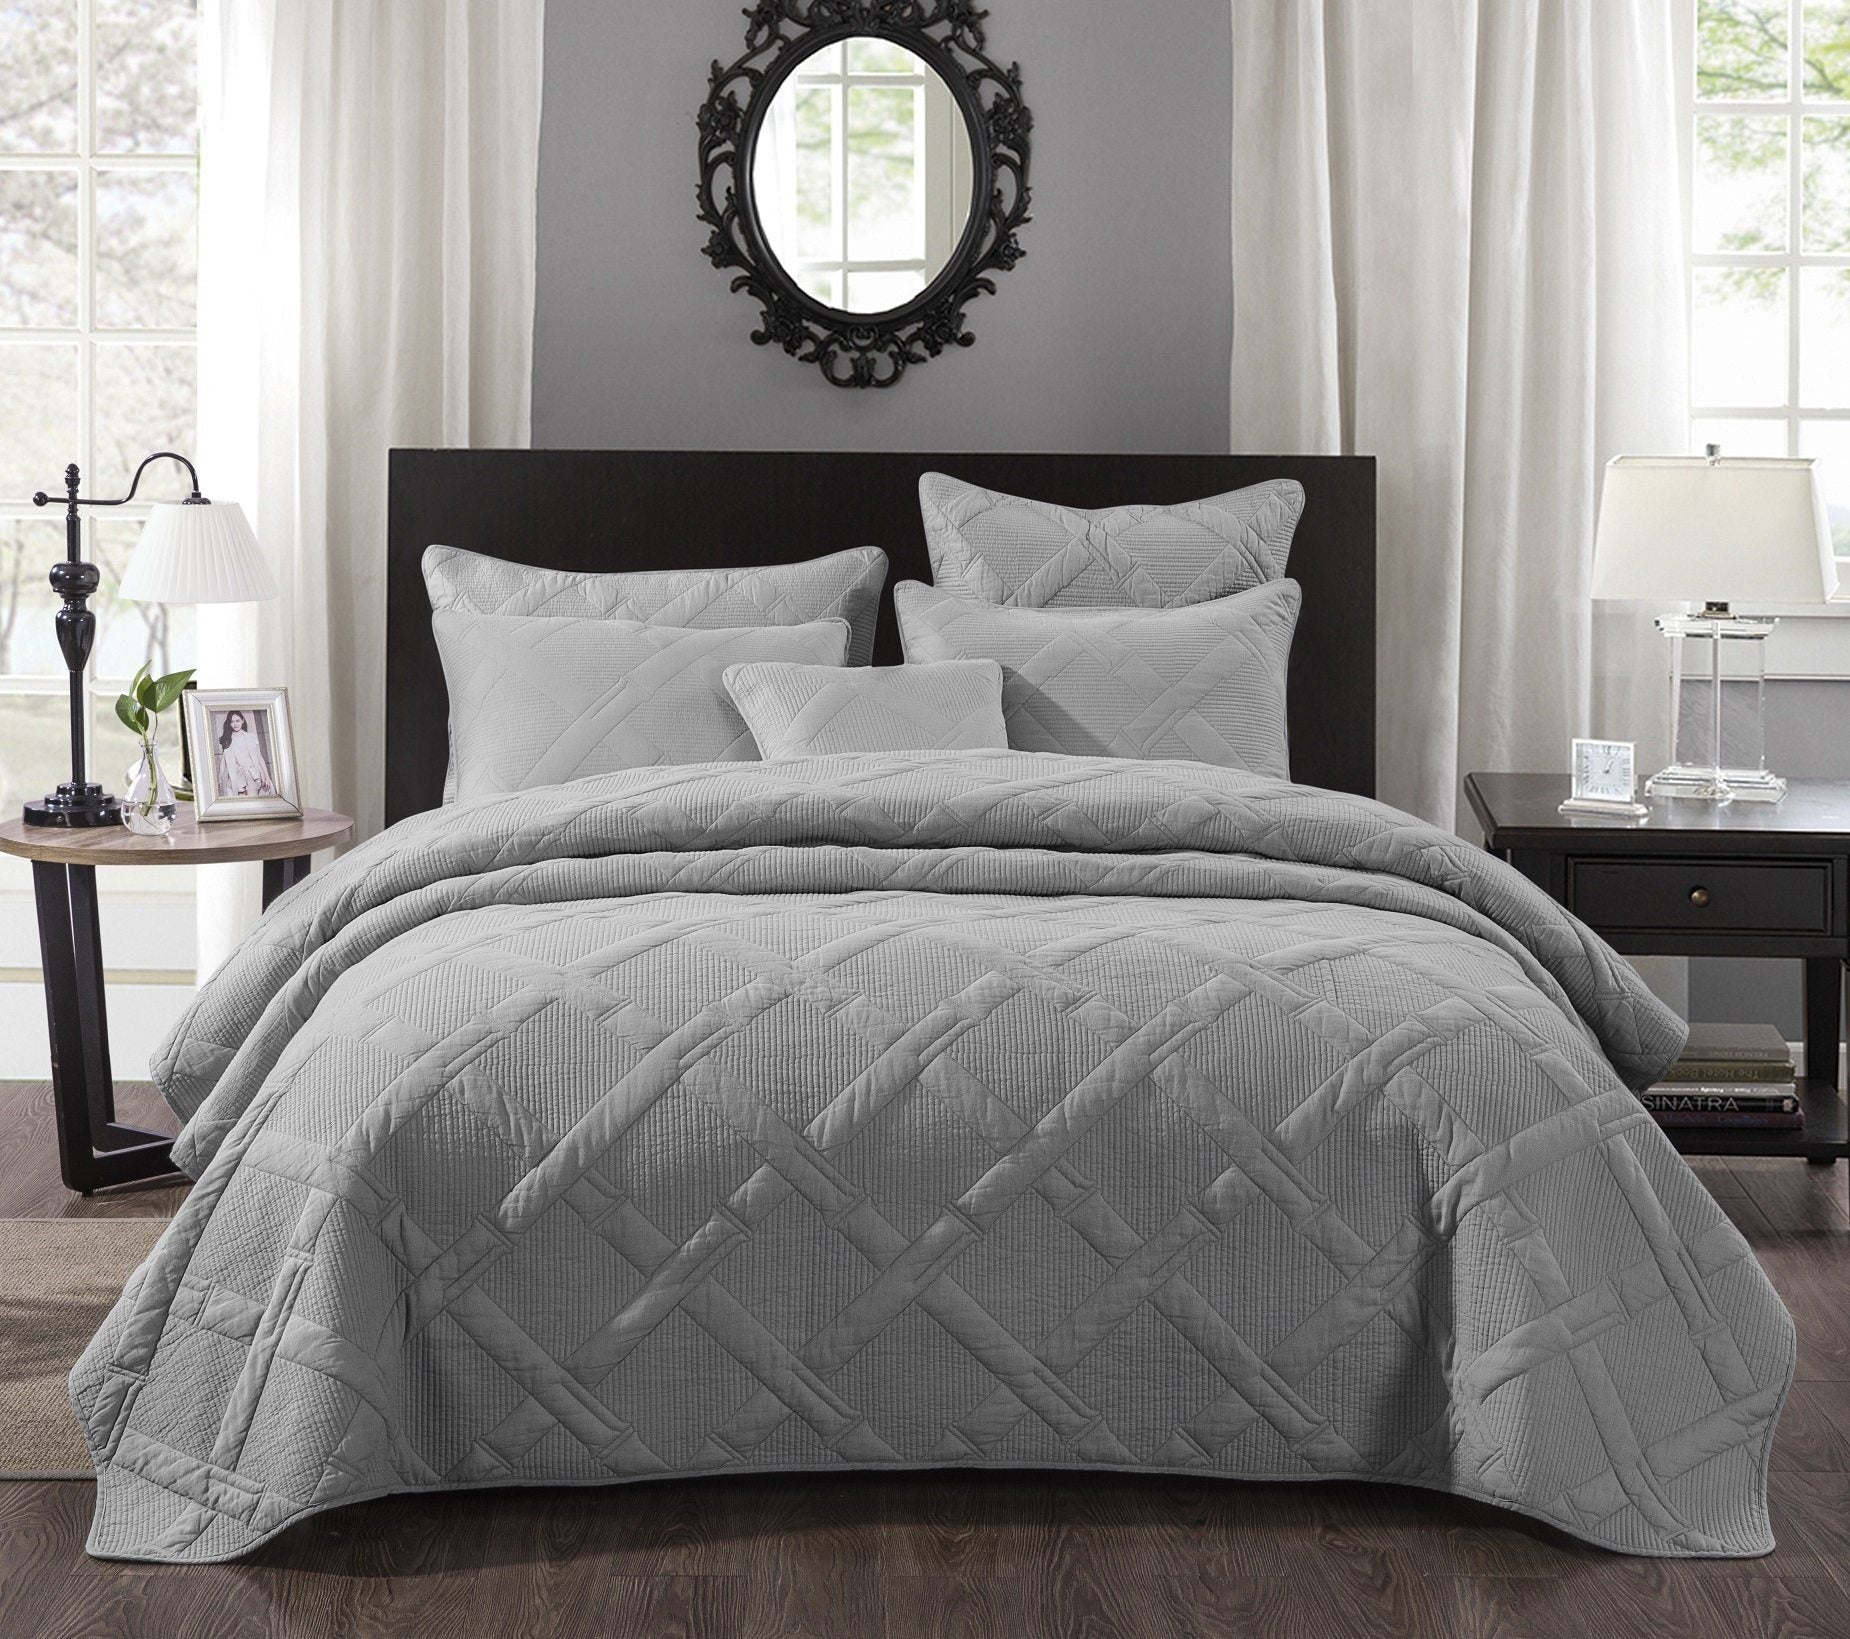 Tache Soothing Pastel Silver Diamond Stitch Light Grey Cotton Quilt Set (JHW-862) - Tache Home Fashion